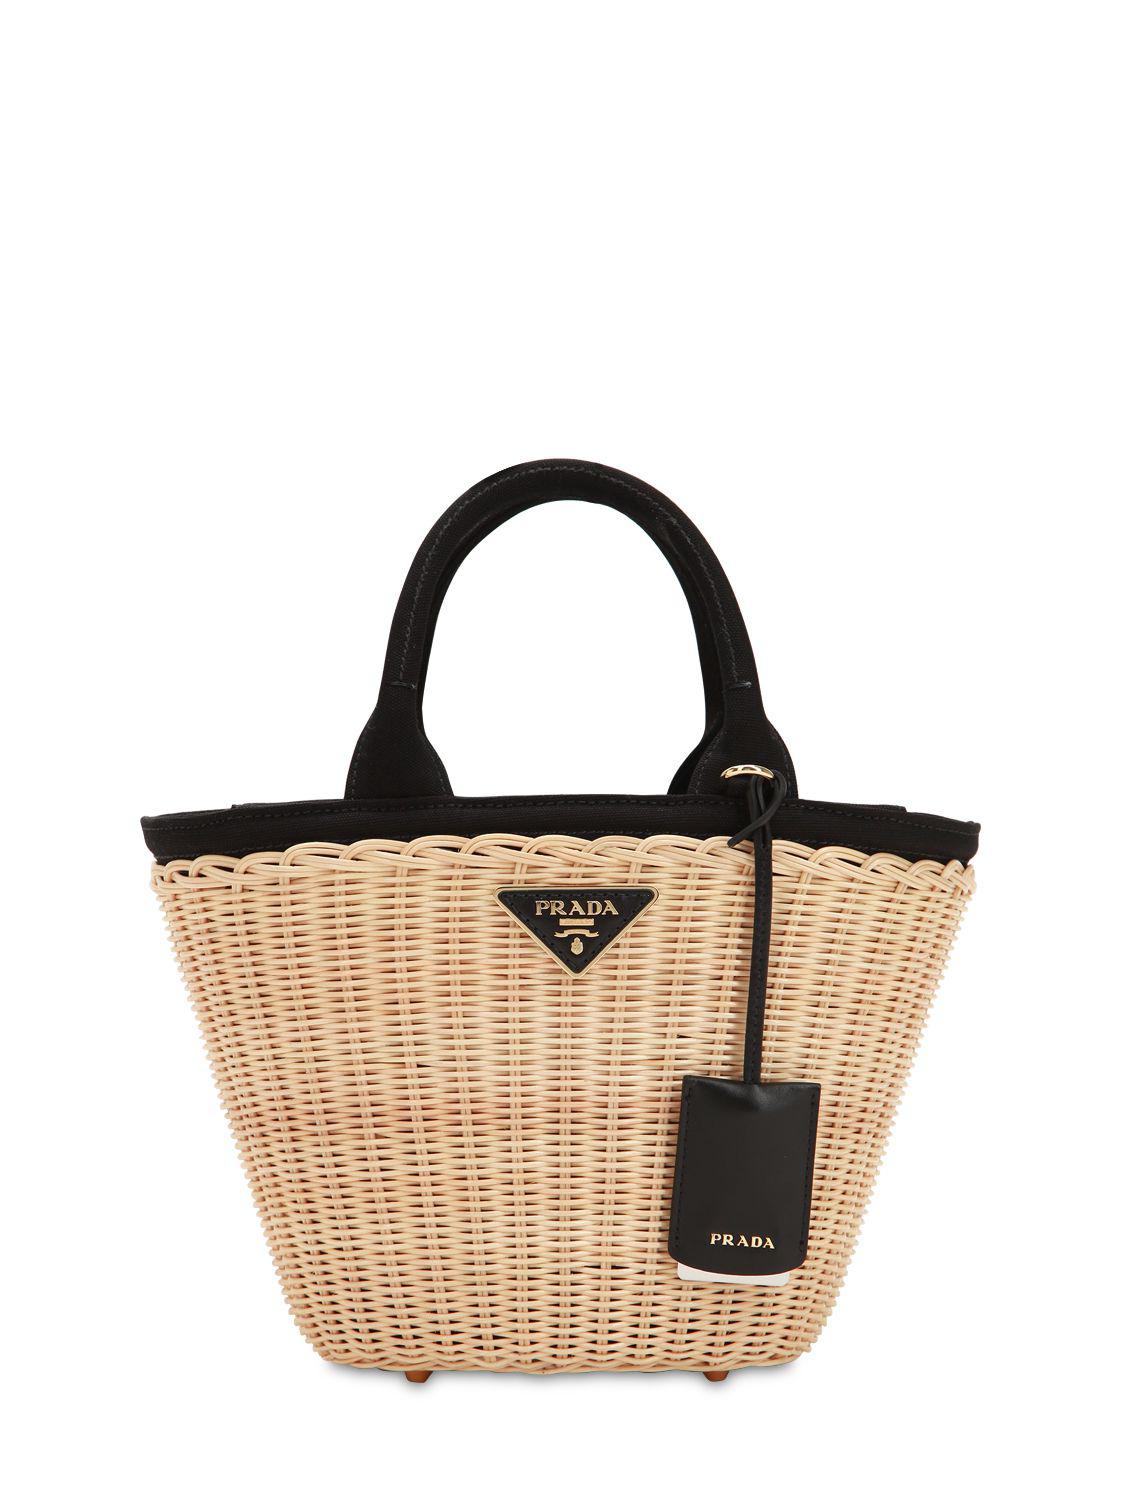 Prada Wicker And Canvas Basket Bag in Black | Lyst